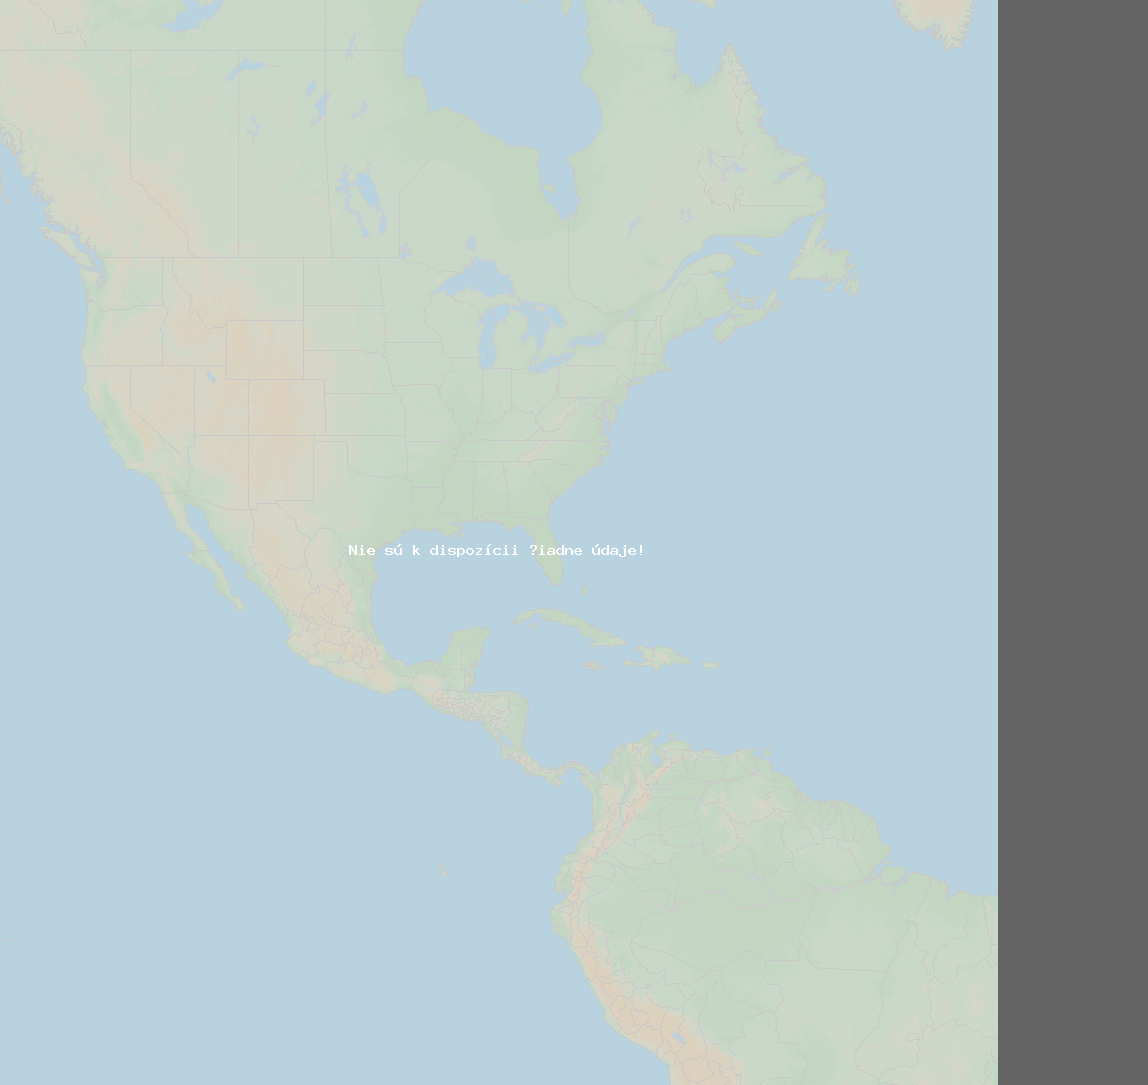 Pomer bleskov (Stanica Hillsborough) North America 2021 